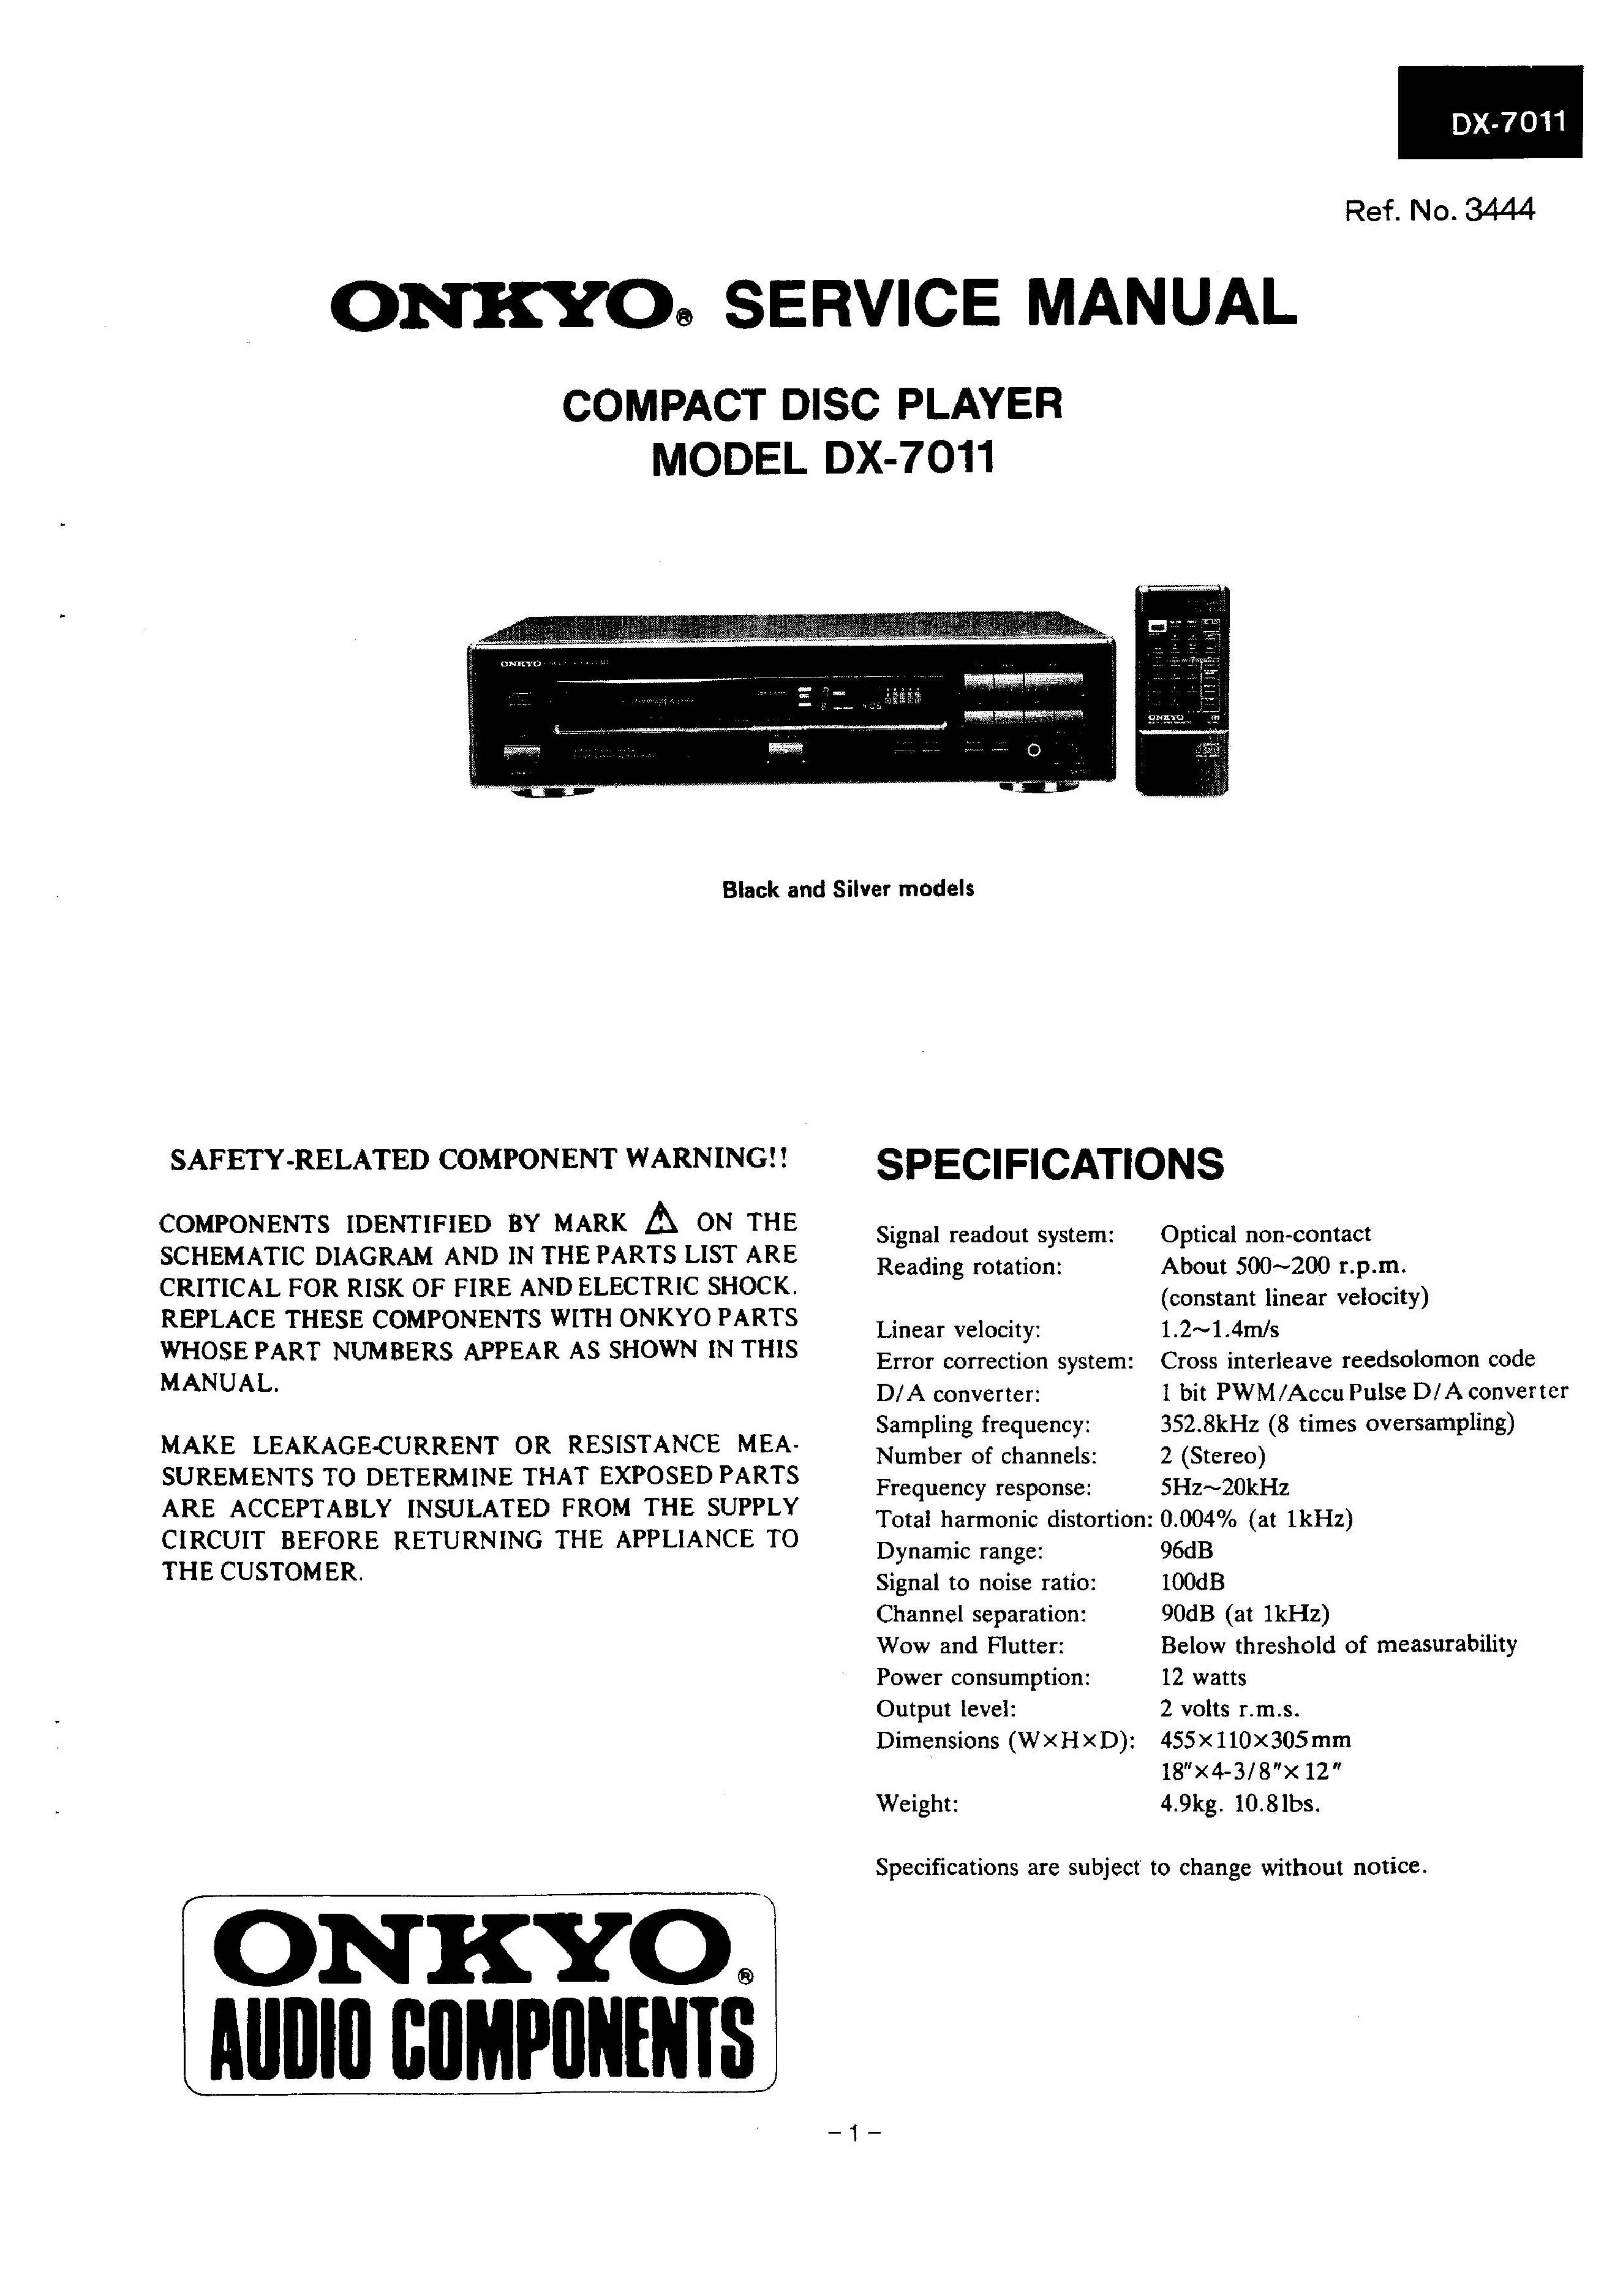 Onkyo DX-7011